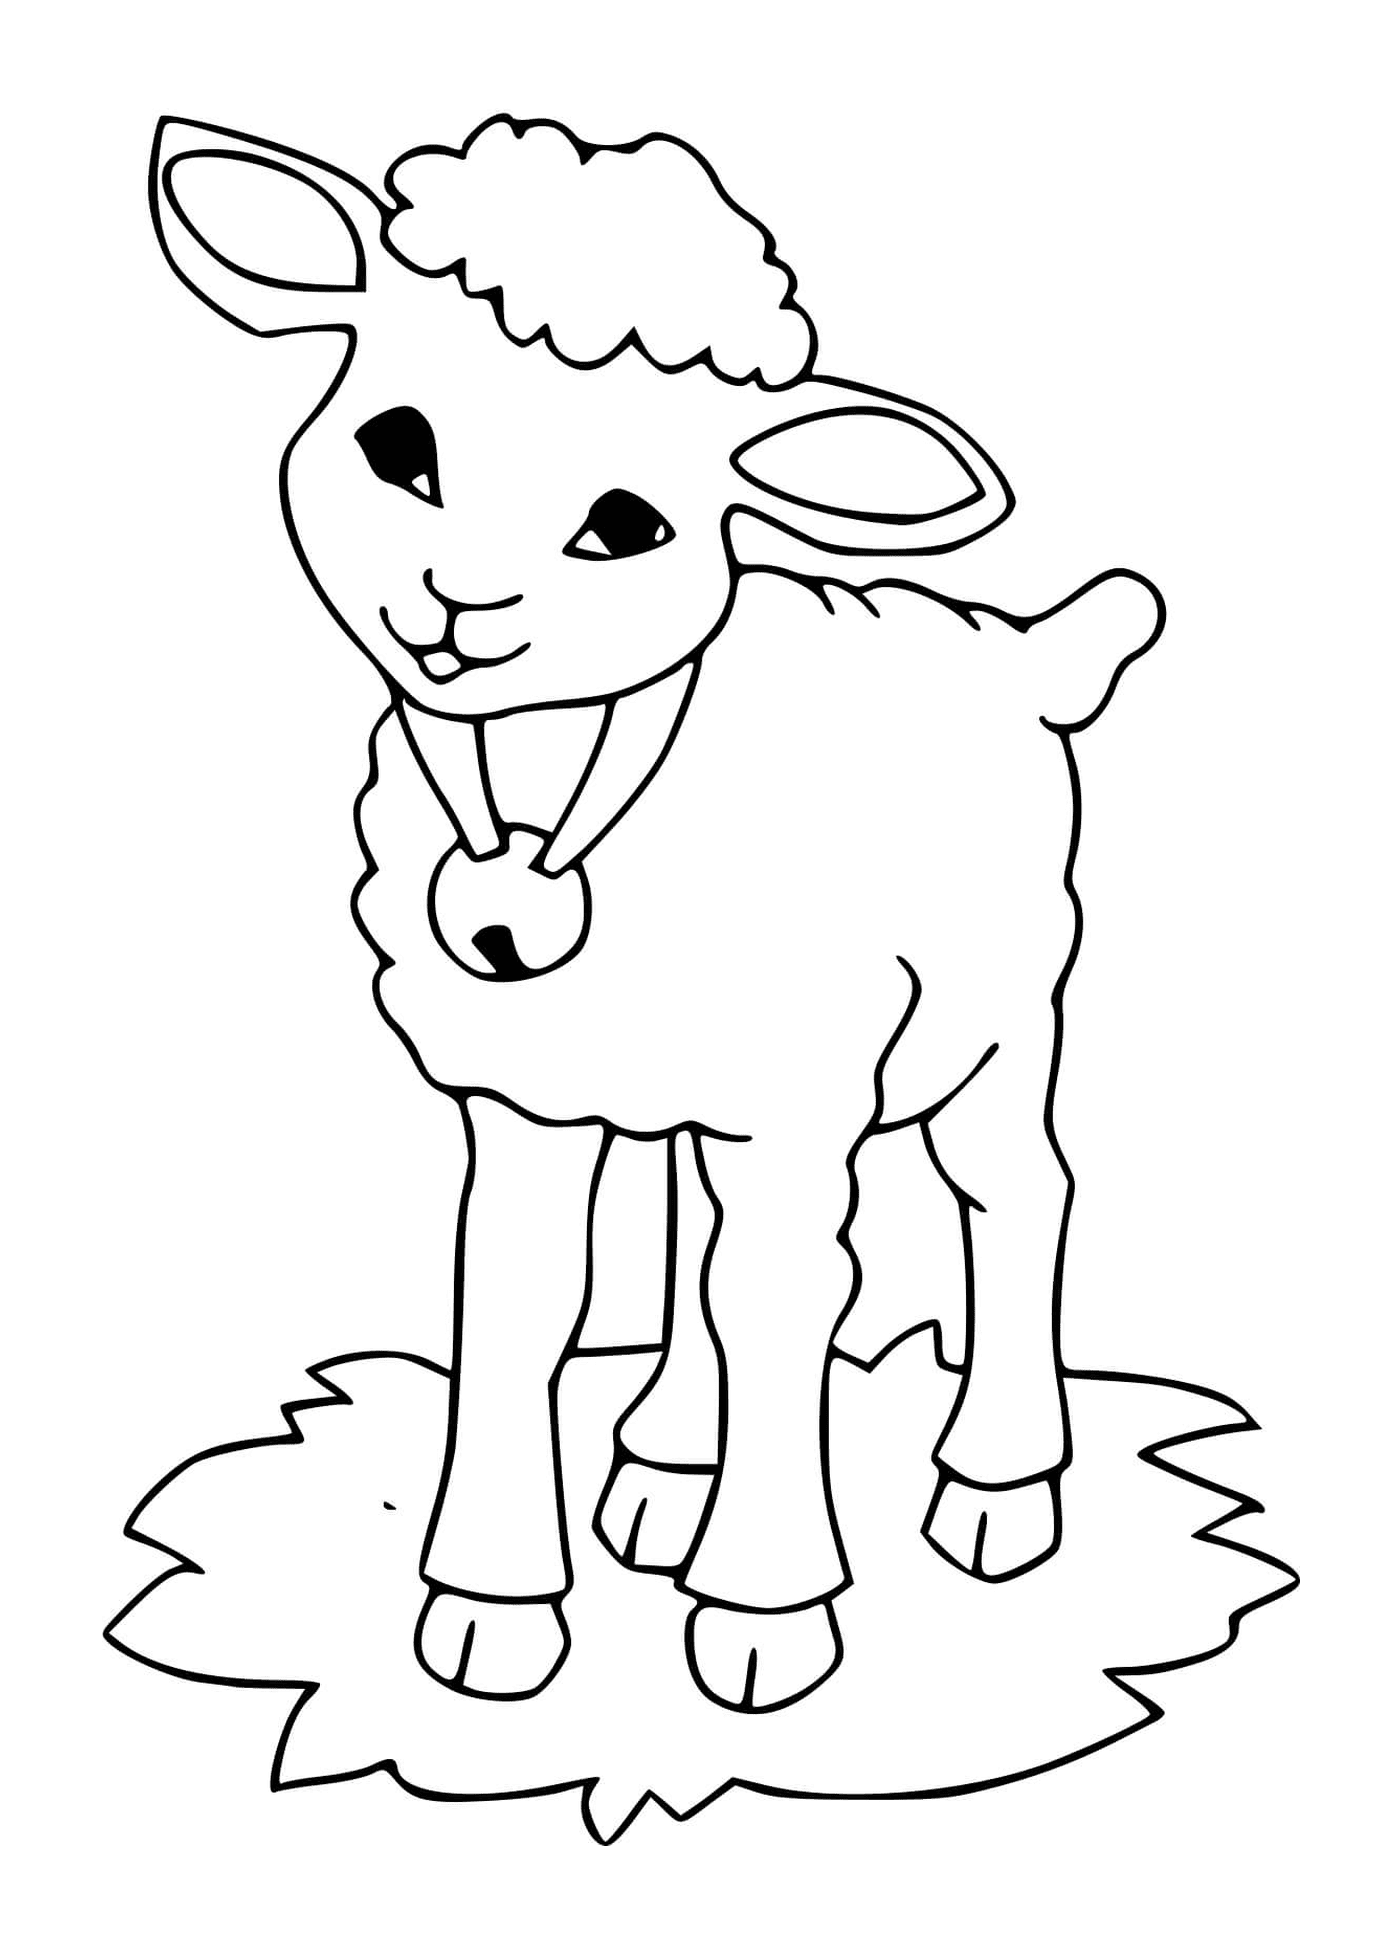  Lamb wears bell nicely 